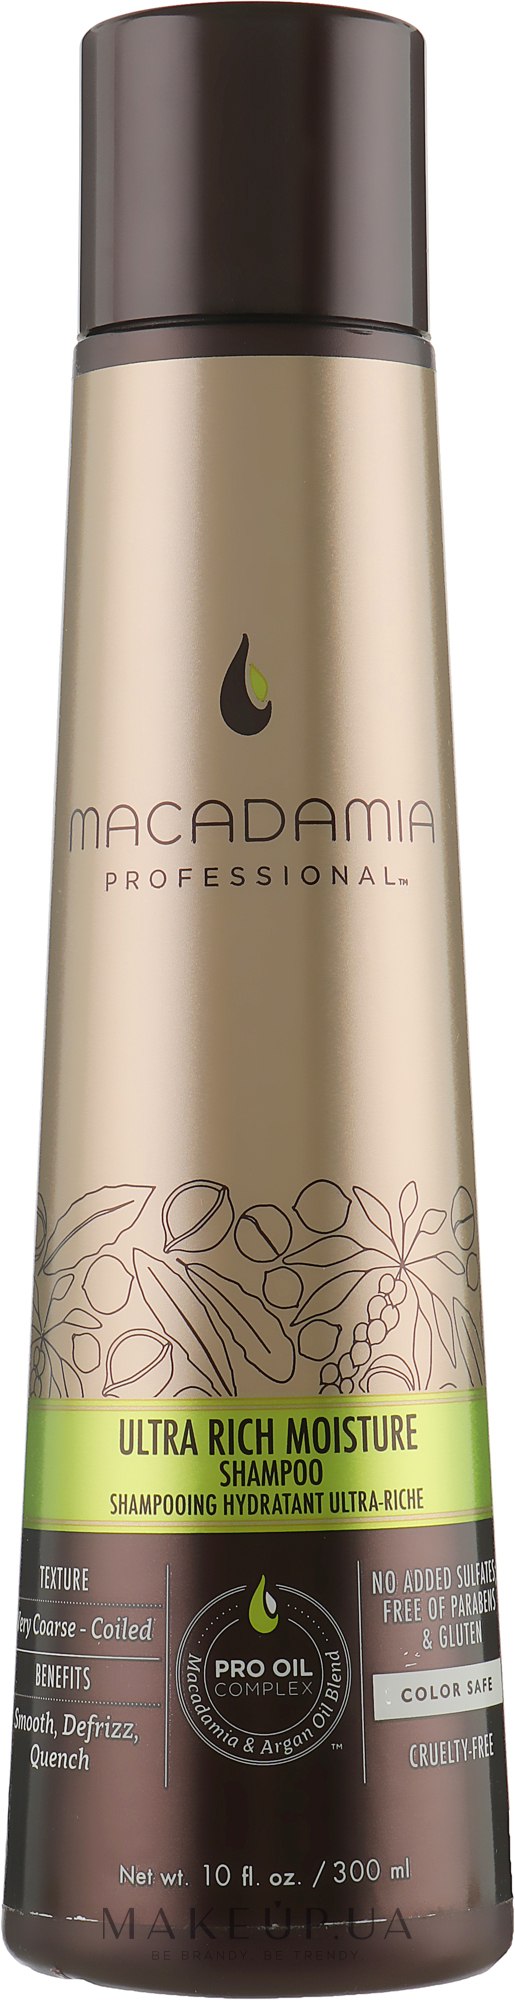 Шампунь увлажняющий для жестких волос - Macadamia Professional Ultra Rich Moisture Shampoo — фото 300ml